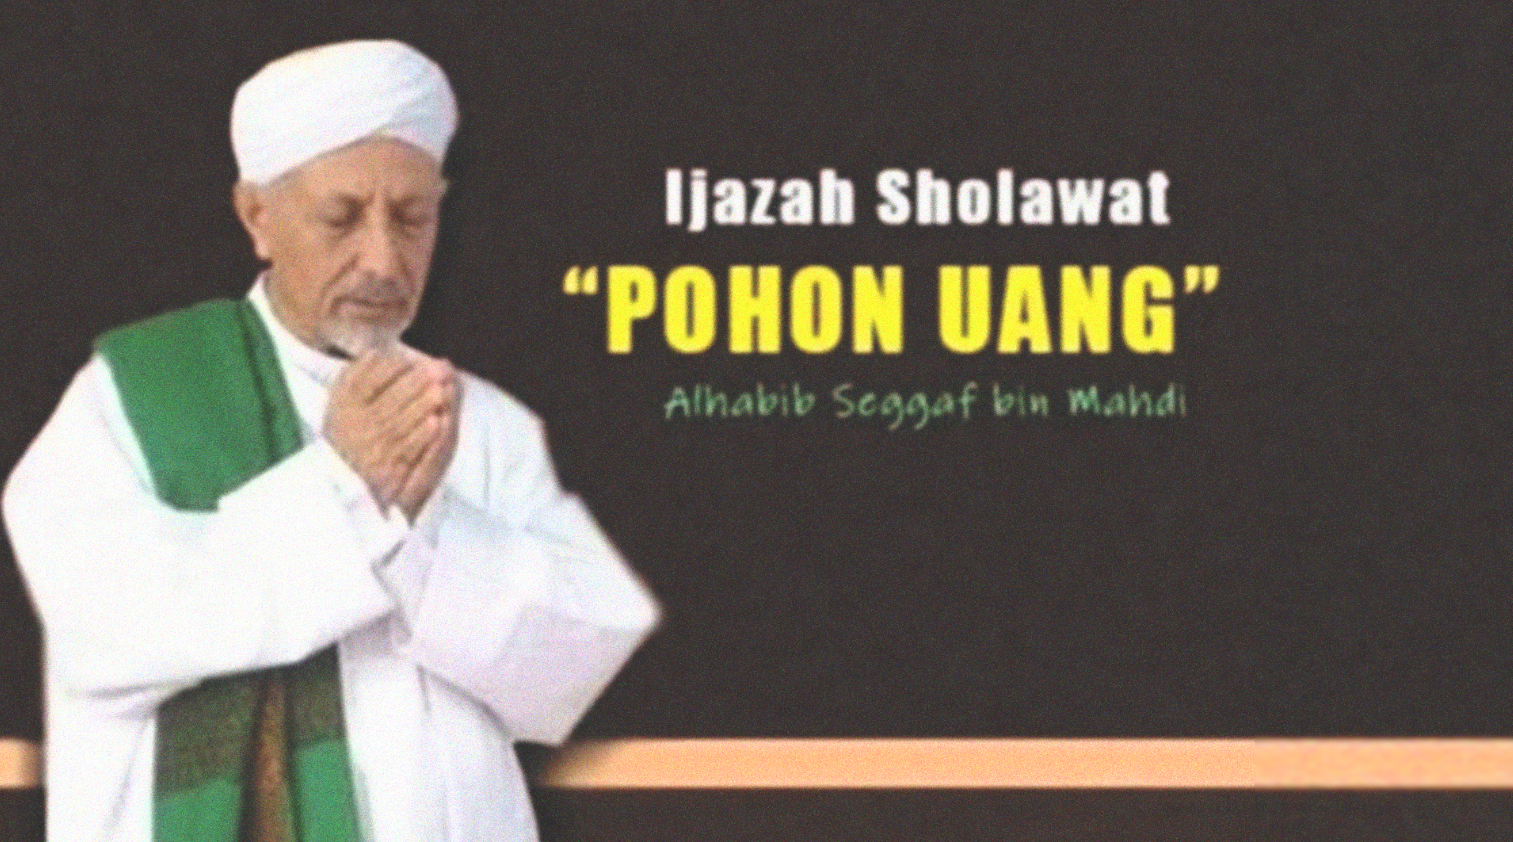 Habib Seggaf bin Mahdi bin Syech Abu Bakar bin Salim, pengasuh Pesantren Al-Ashriyyah Nurul Iman, Parung Bogor. (Foto: Istimewa)